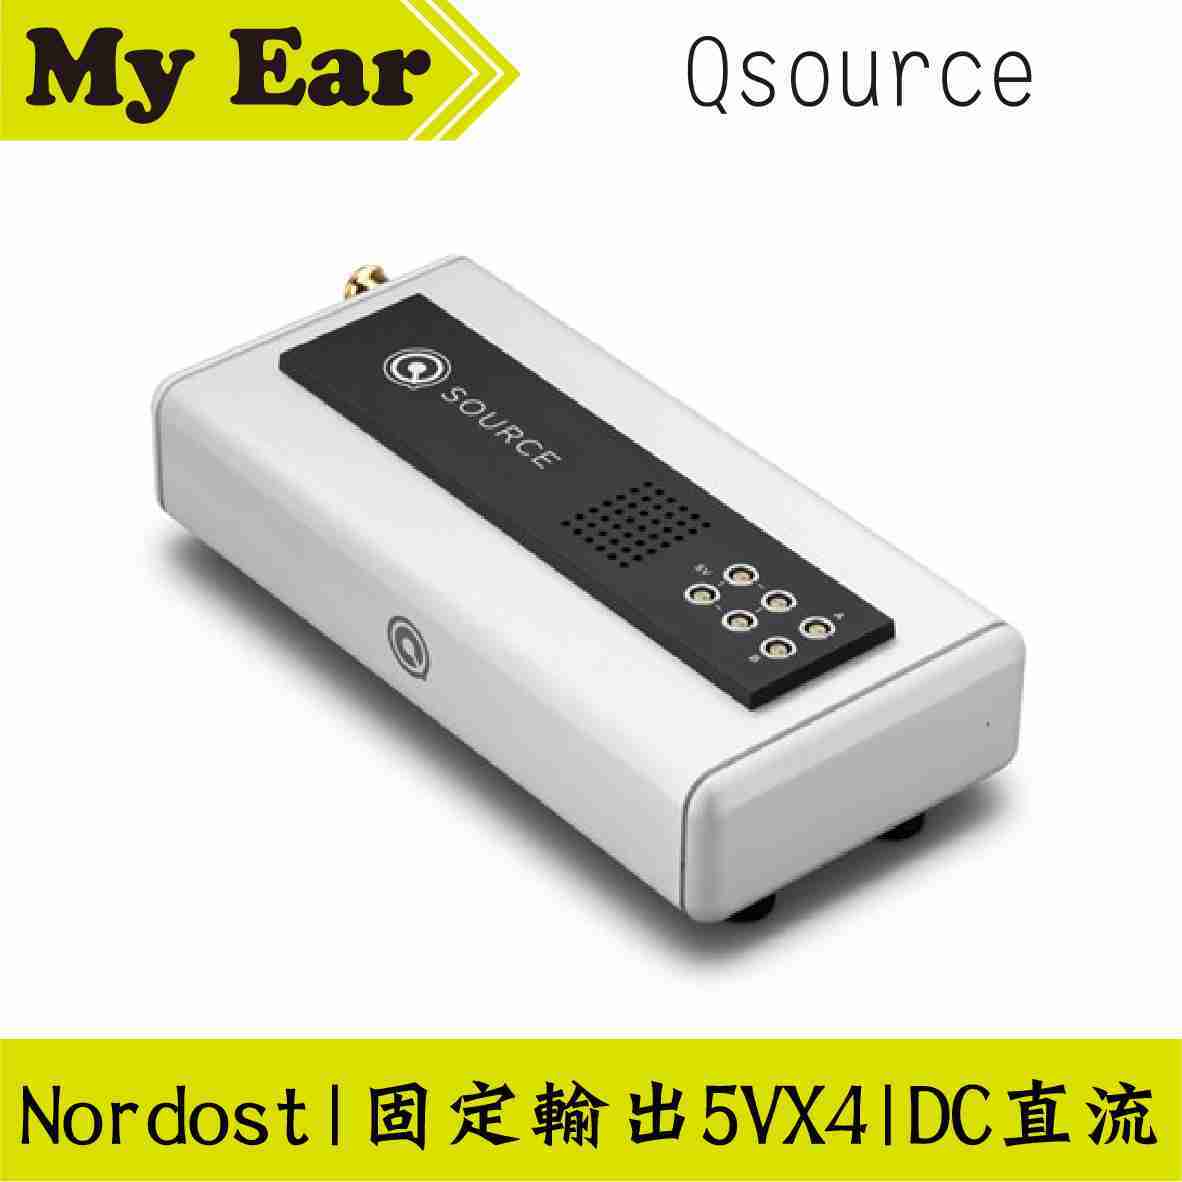 Nordost Qsource 電源供應器 線性轉直流 | My Ear耳機專門店